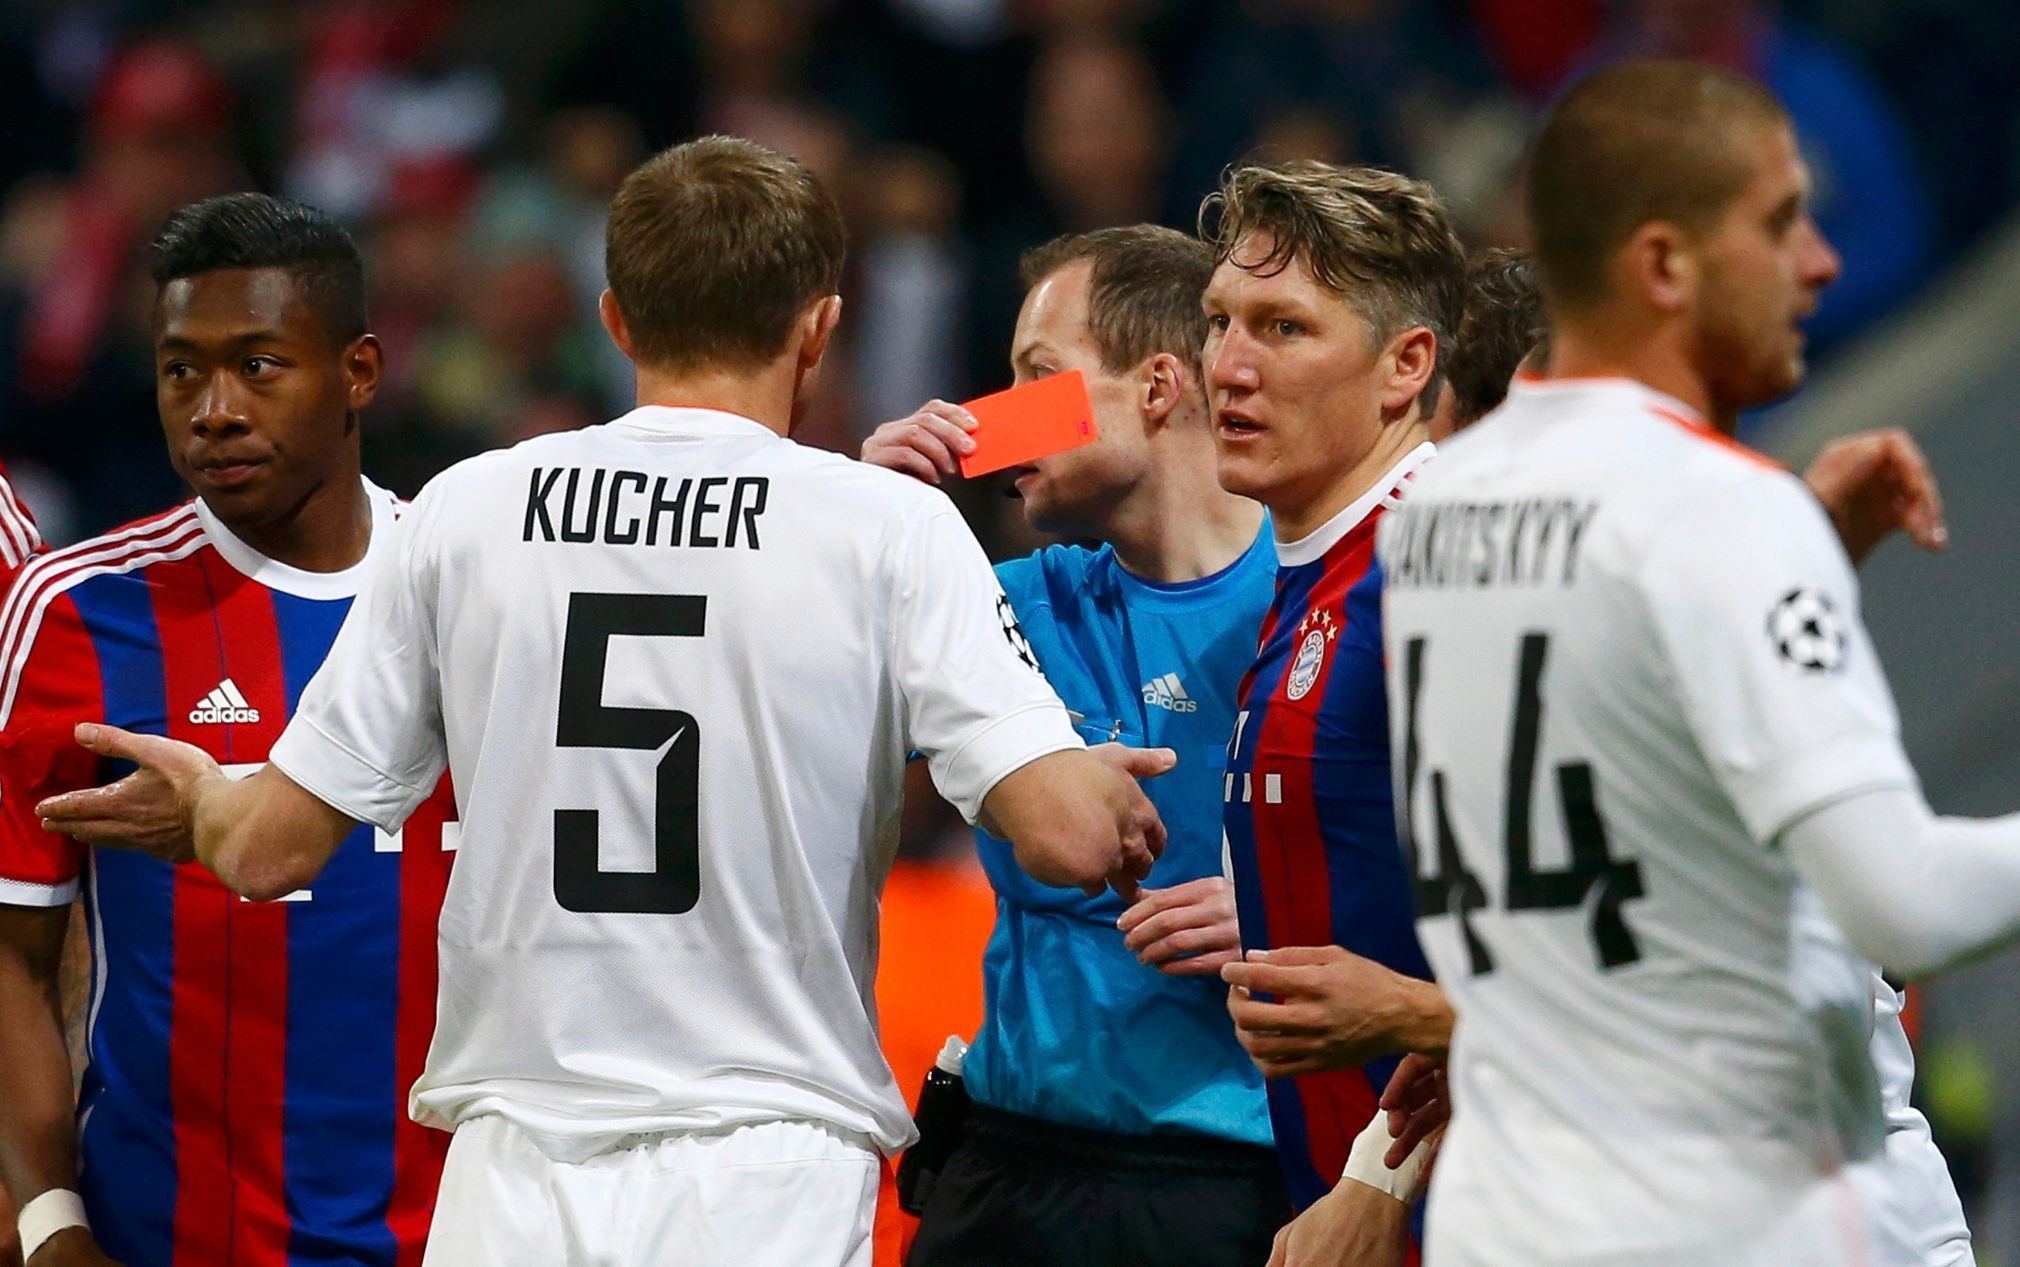 Match referee Collum shows a red card to Shakhtar Donetsk's Kucher as Bayern Munich's Aalaba and Schweinsteiger watch during their Champions League Round of 16 second leg soccer match in Munich